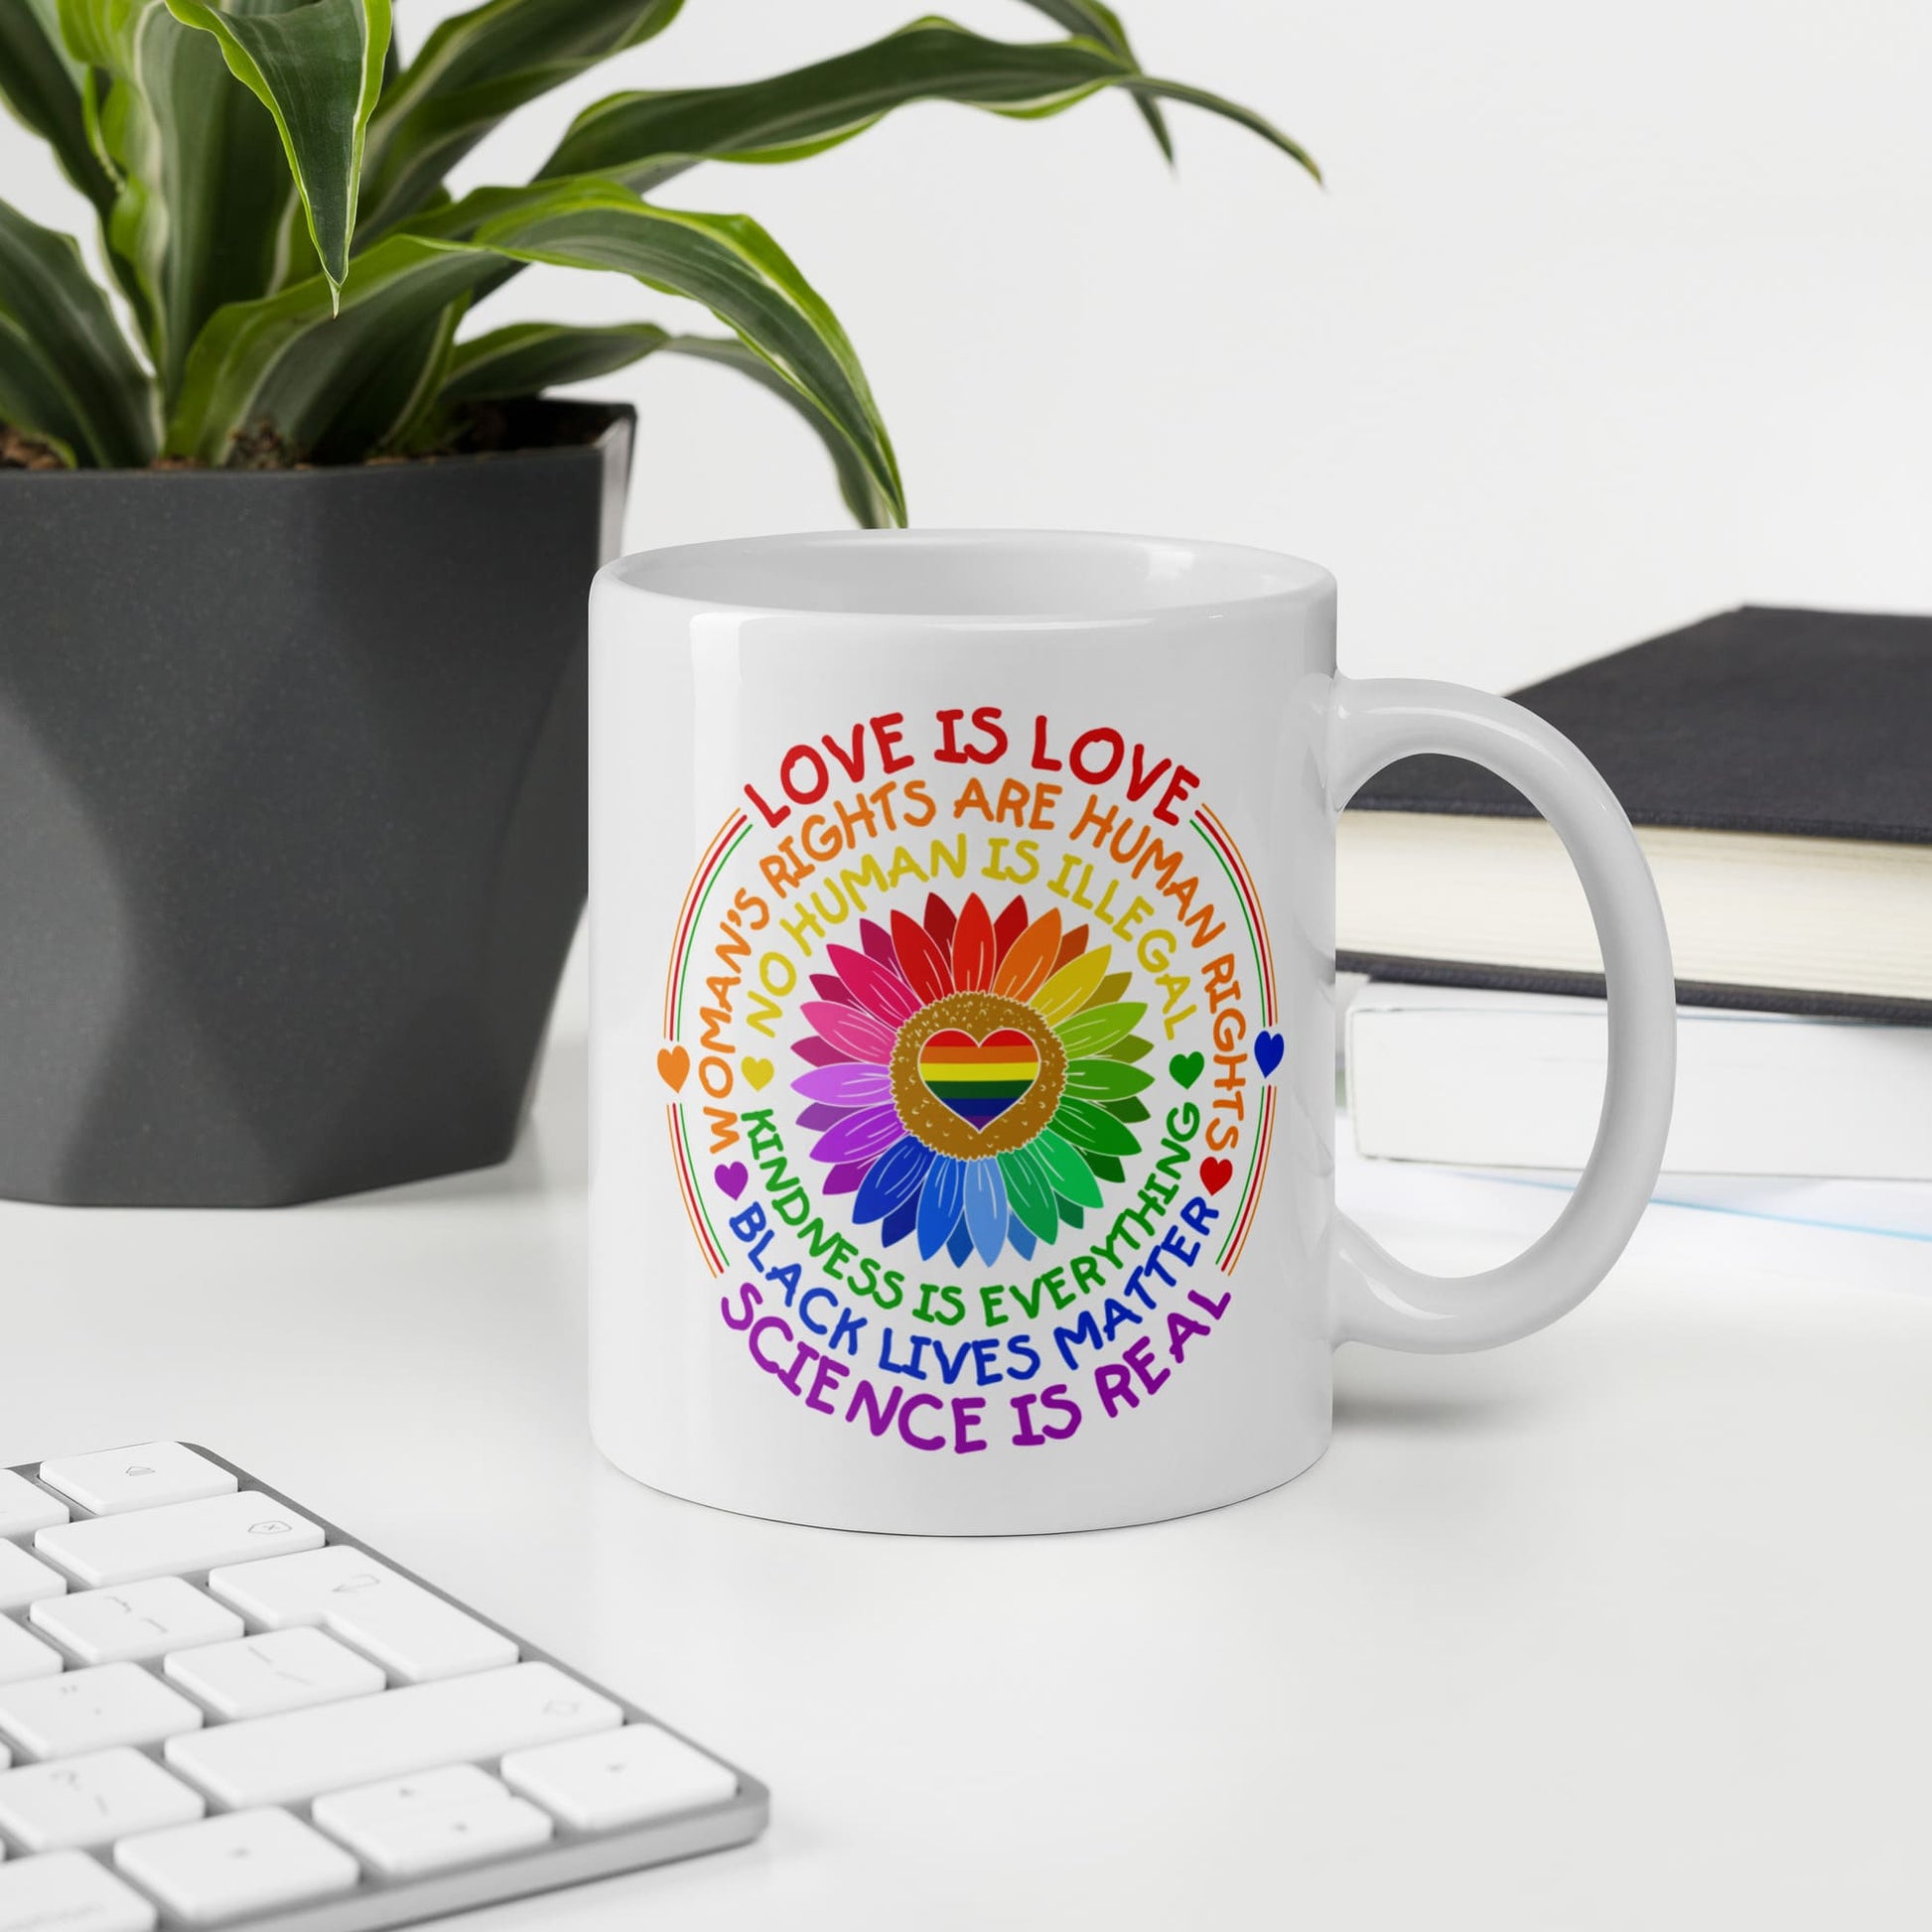 LGBTQ pride mug, human rights coffee or tea cup on desk